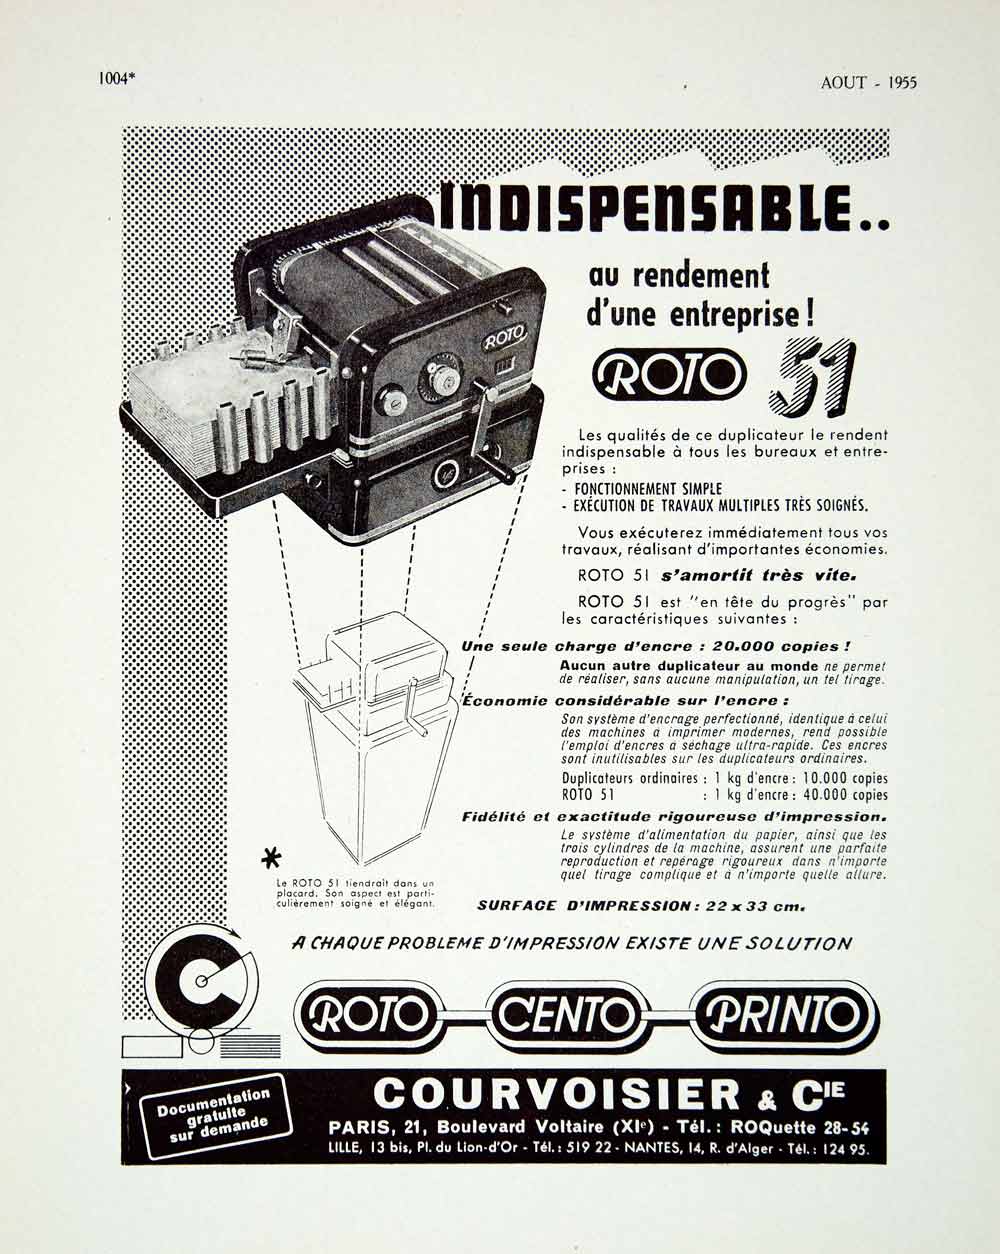 1955 Ad Vintage French Roto 51 Duplicator Office Machine Courvoisier & Cie VENA4